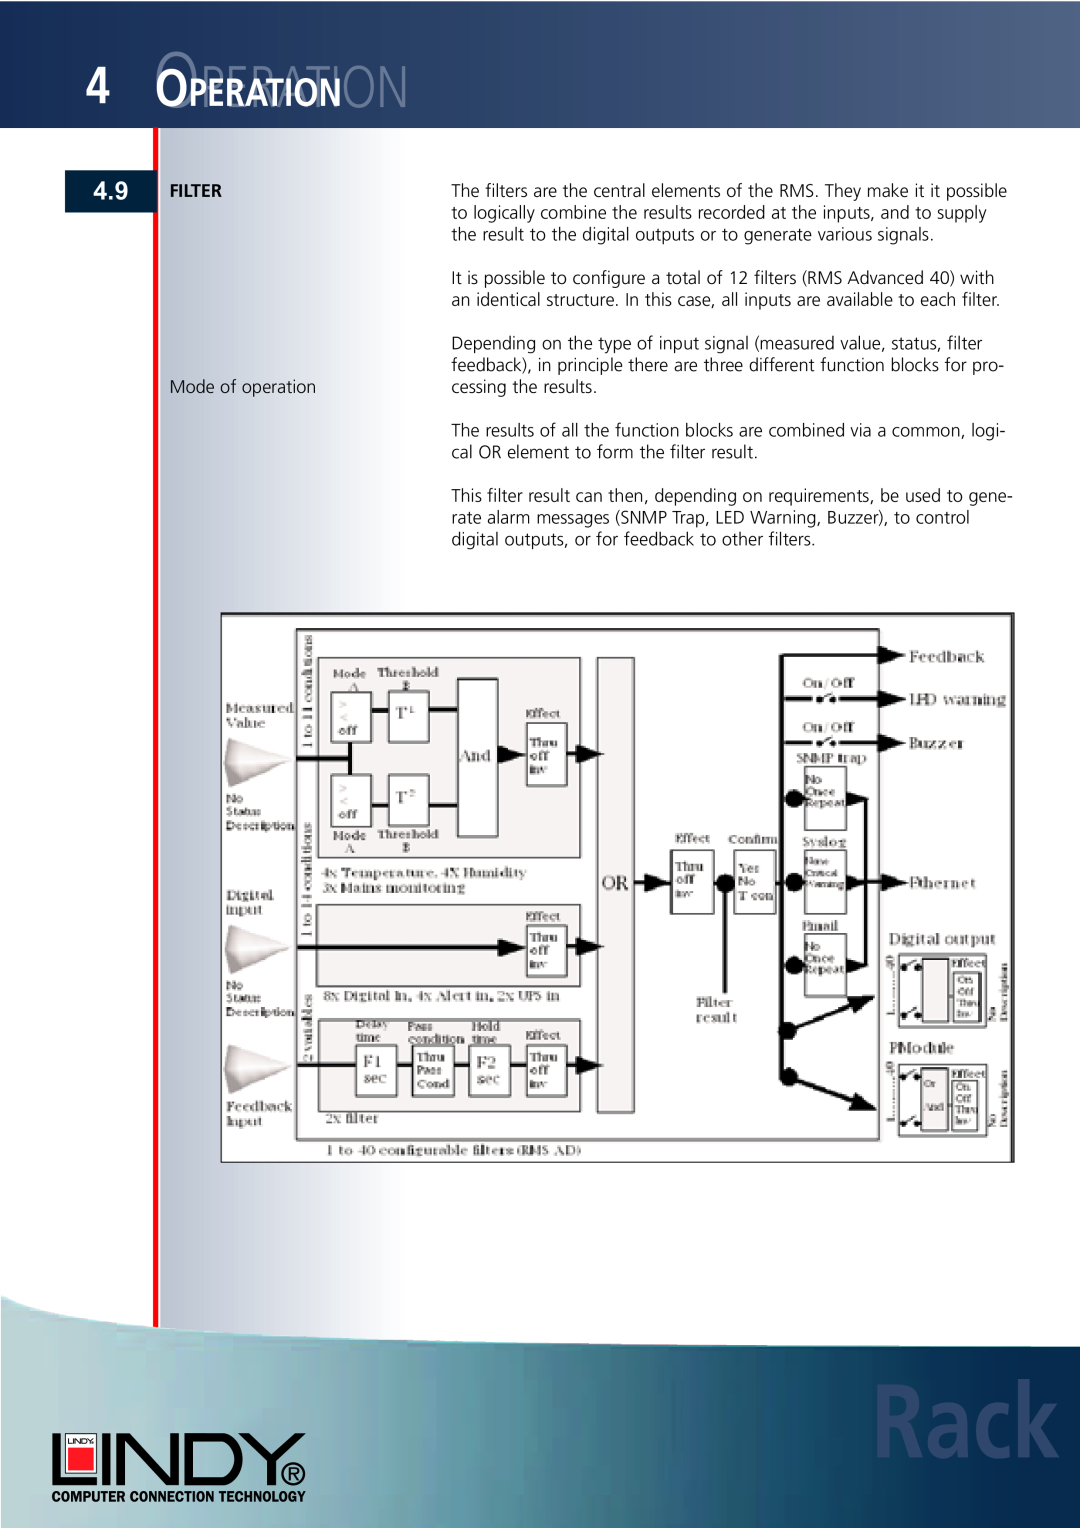 Lindy Carbon Monoxide Alarm user manual Rack, Ooperationperation, Filter 